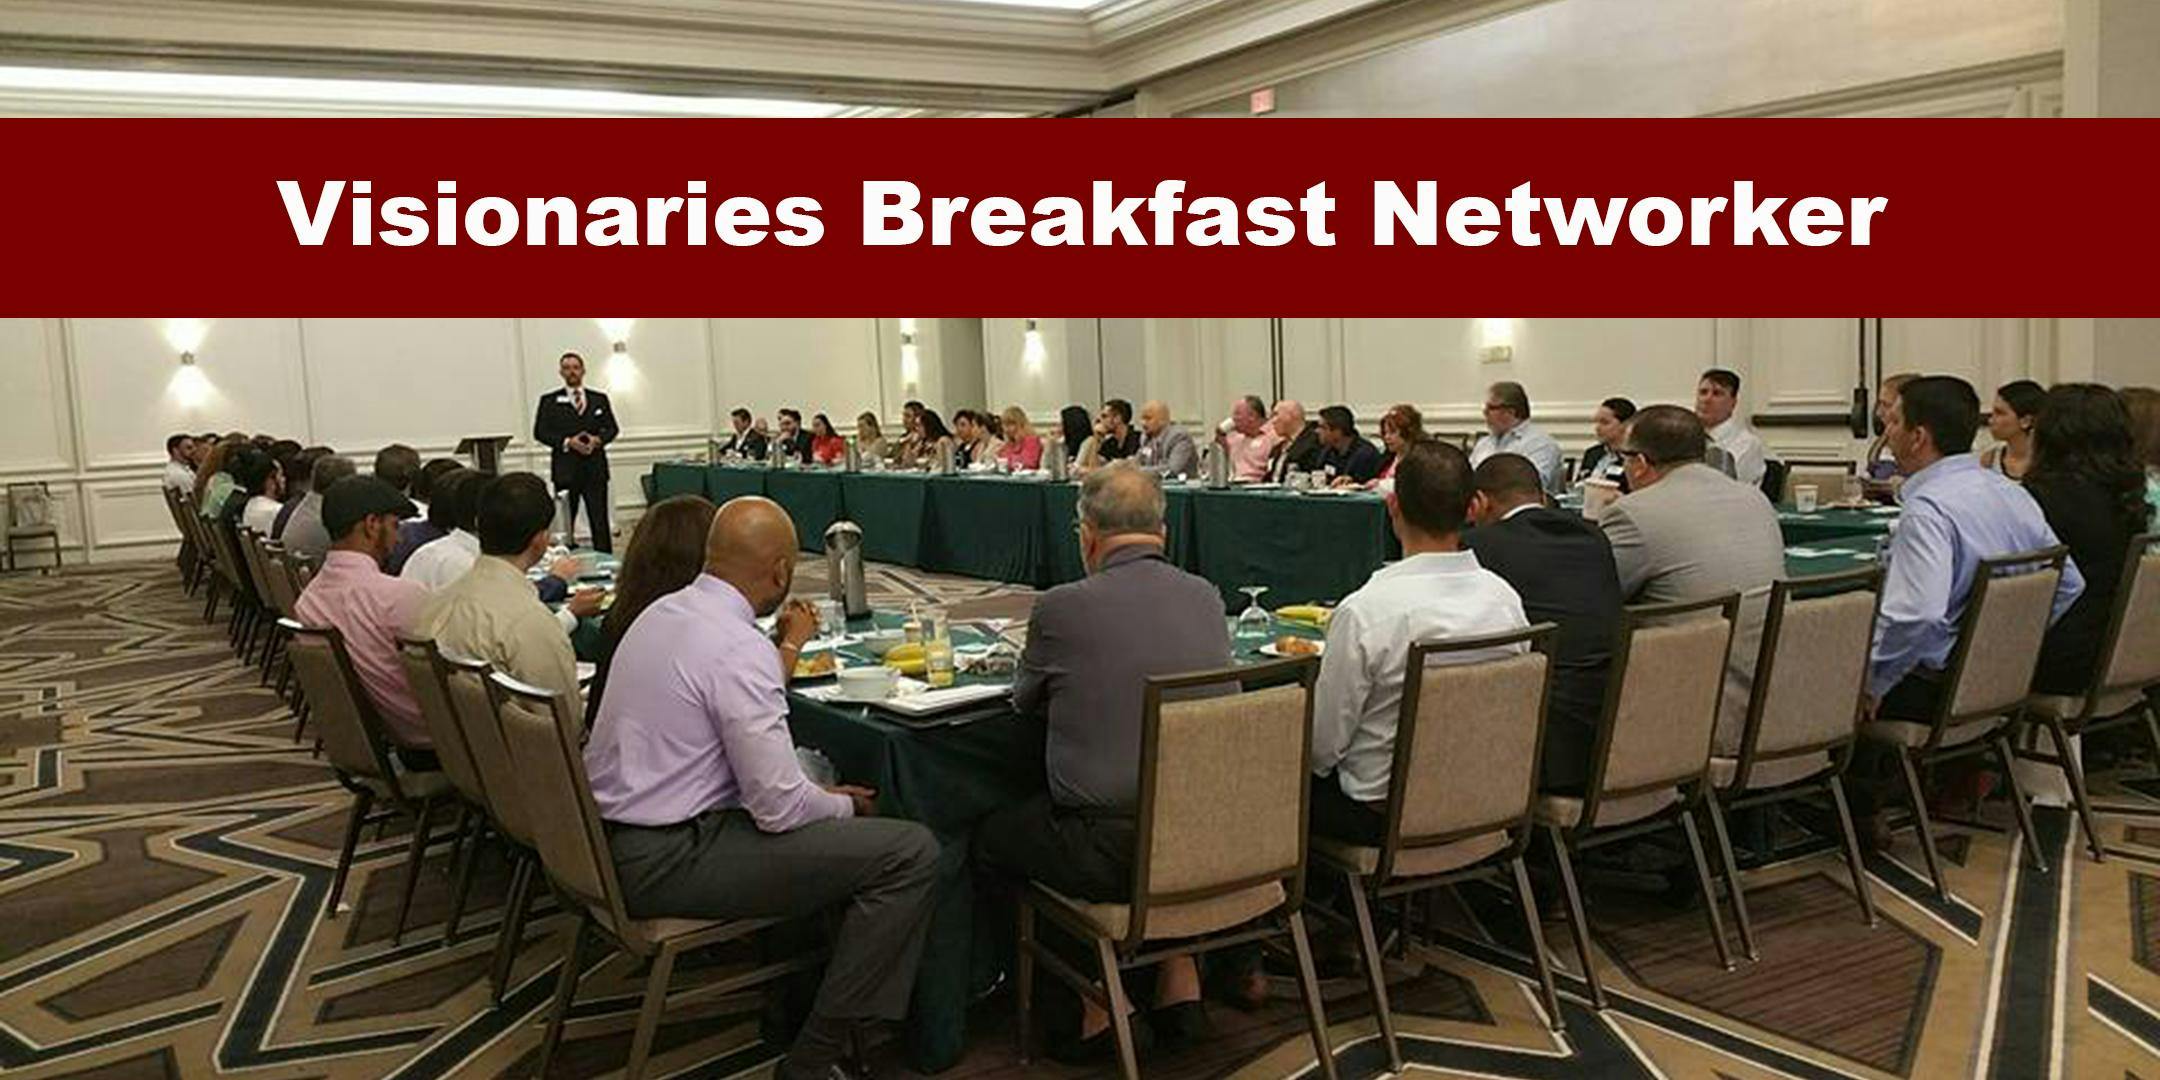 BNI Vision Breakfast Networker